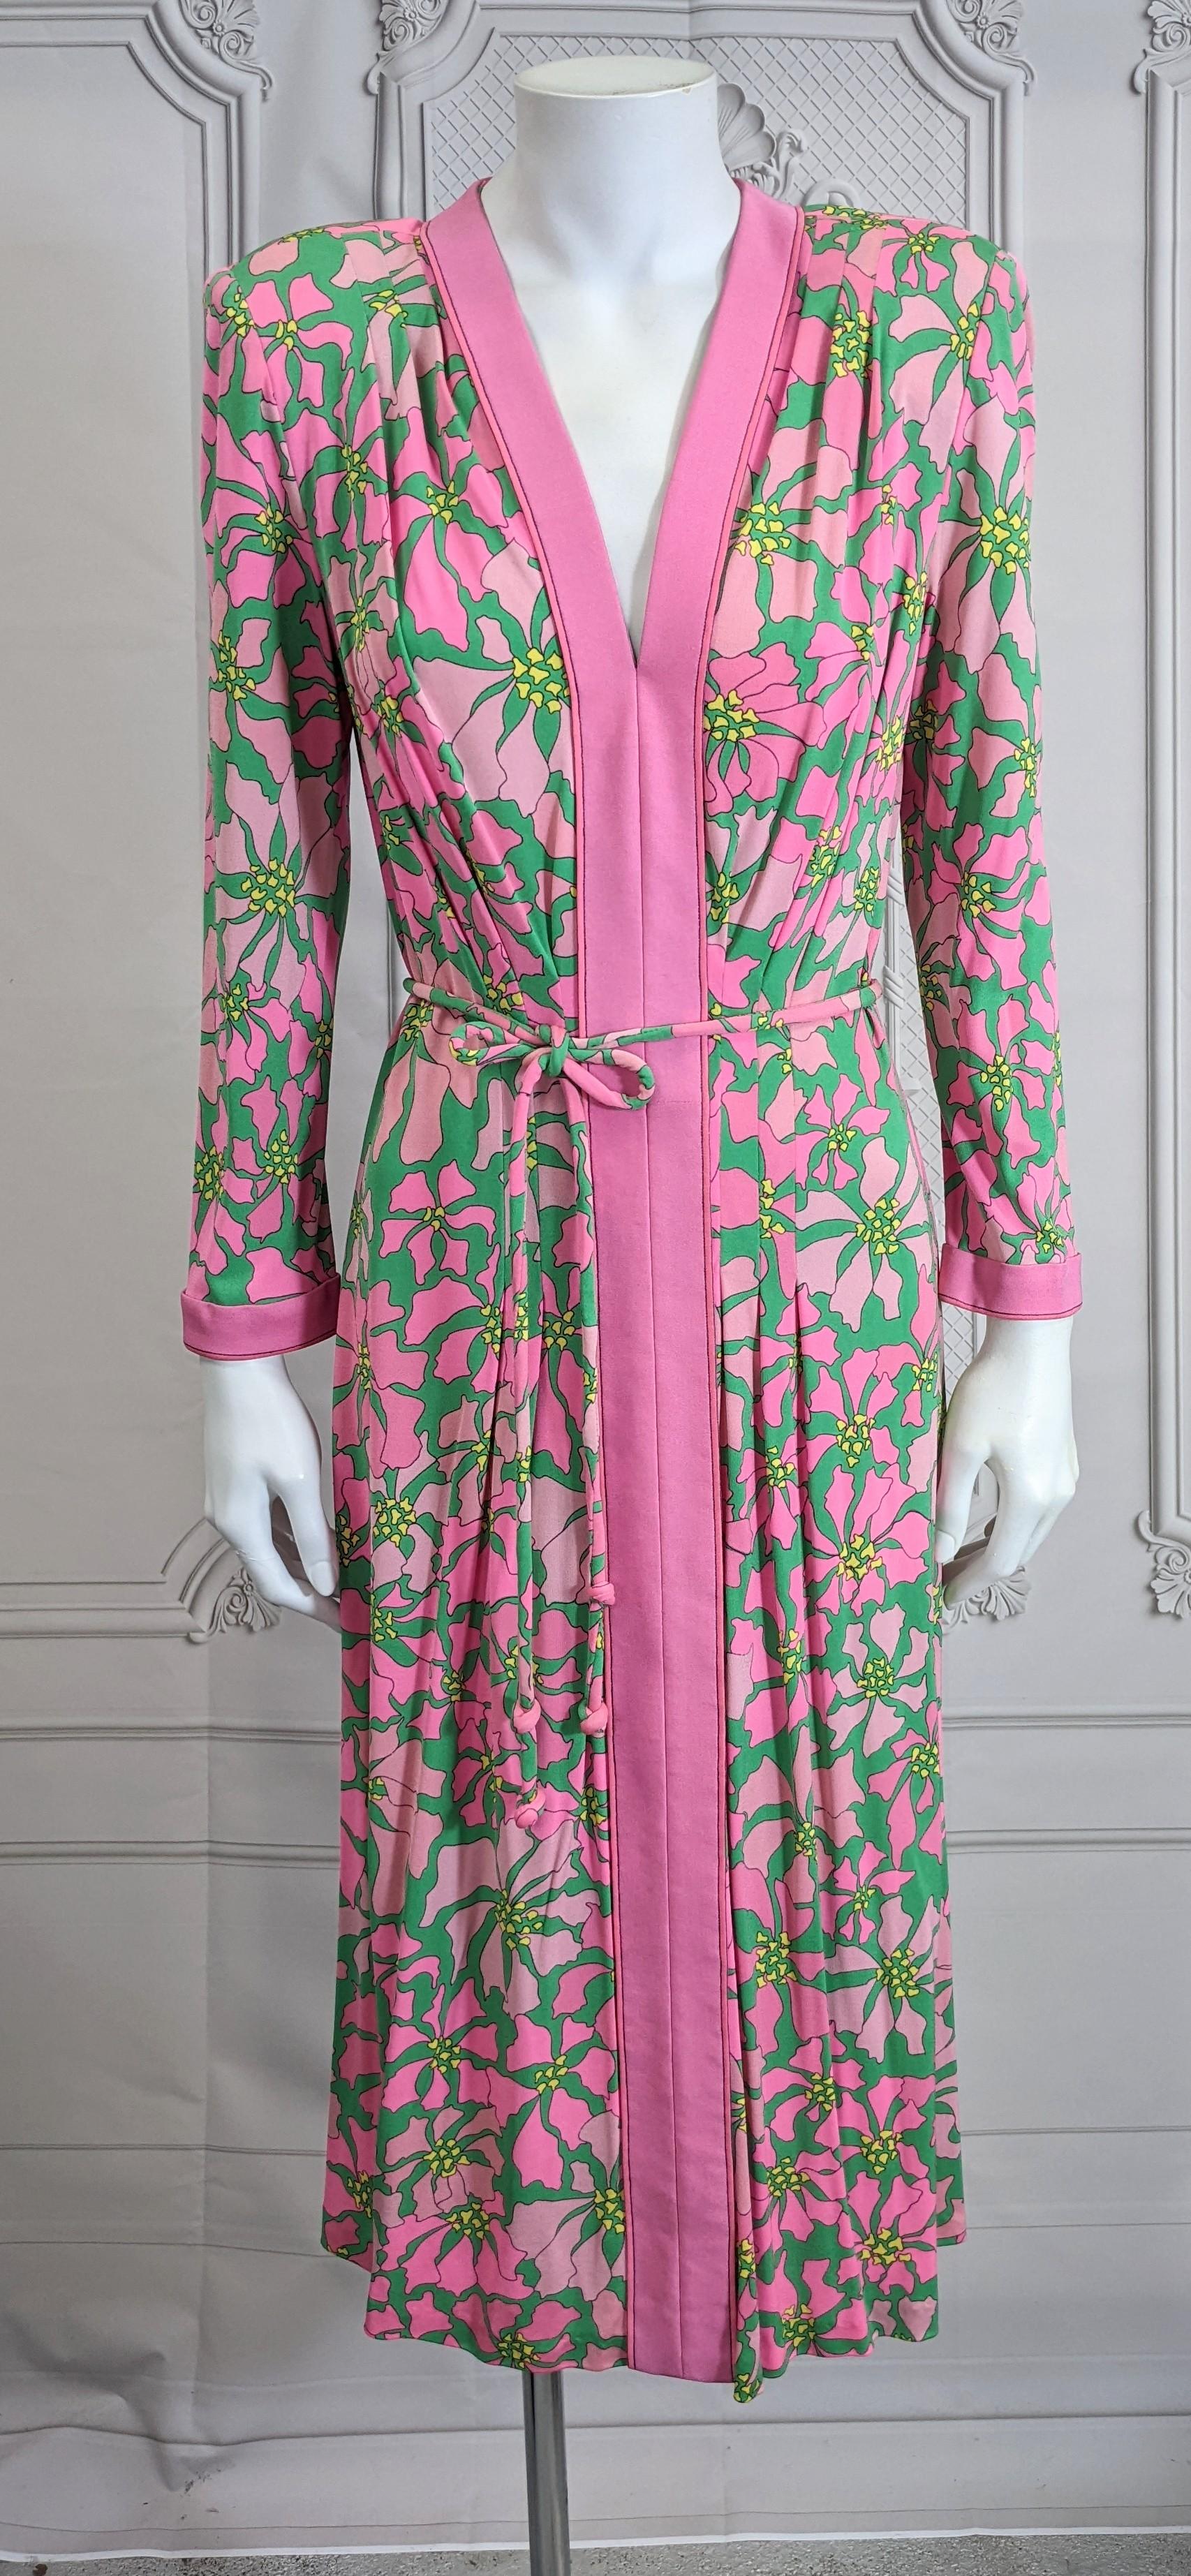 Brown Bessi Silk Jersey Poinsettia Print Dress For Sale